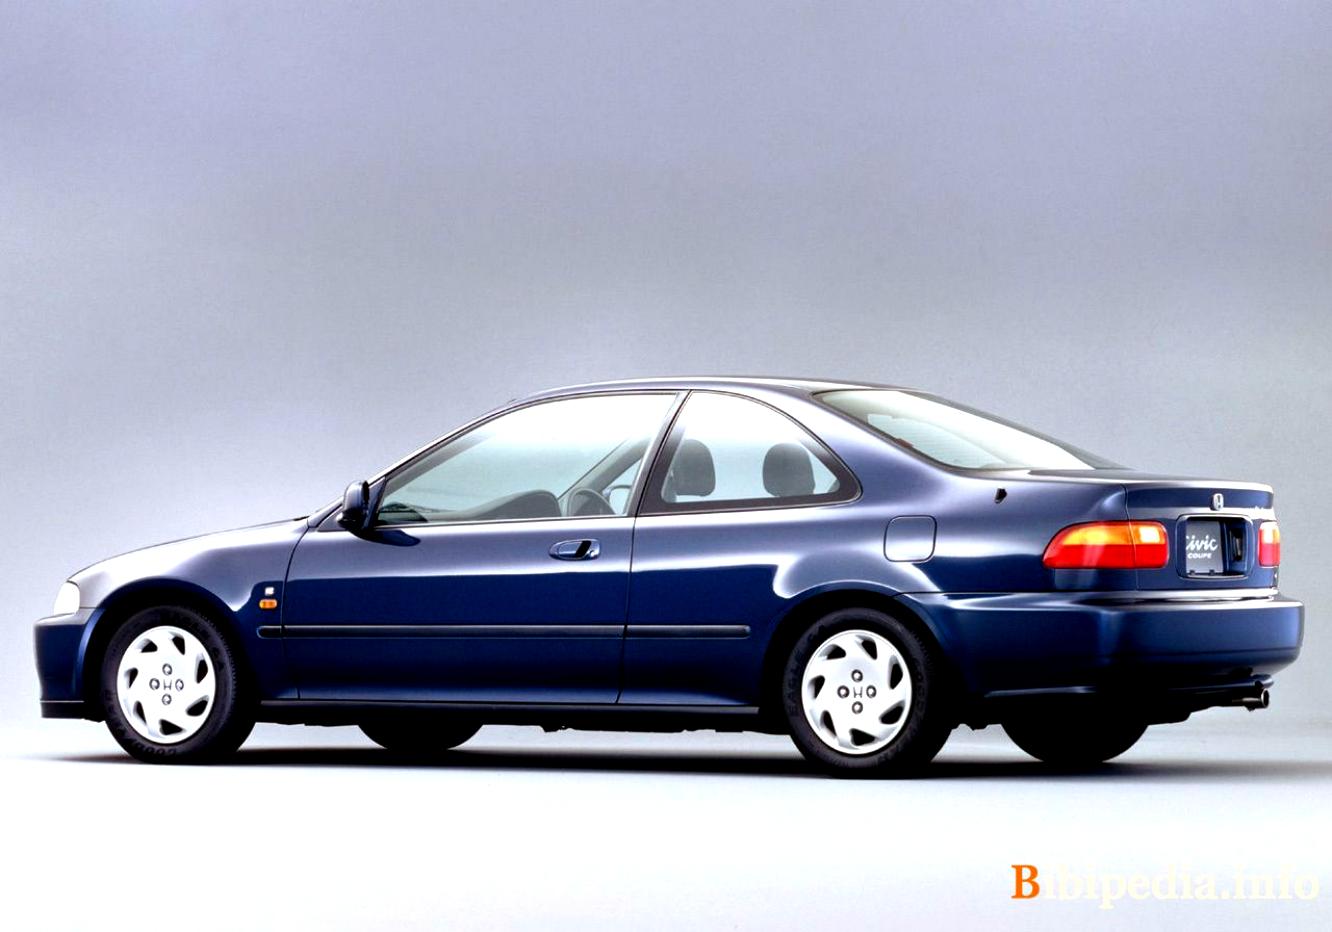 Хонда 95 год. Хонда Цивик 5 поколения. Honda Civic 5 Coupe. Honda Civic Coupe ej1 1993. Honda Civic Coupe 1993.